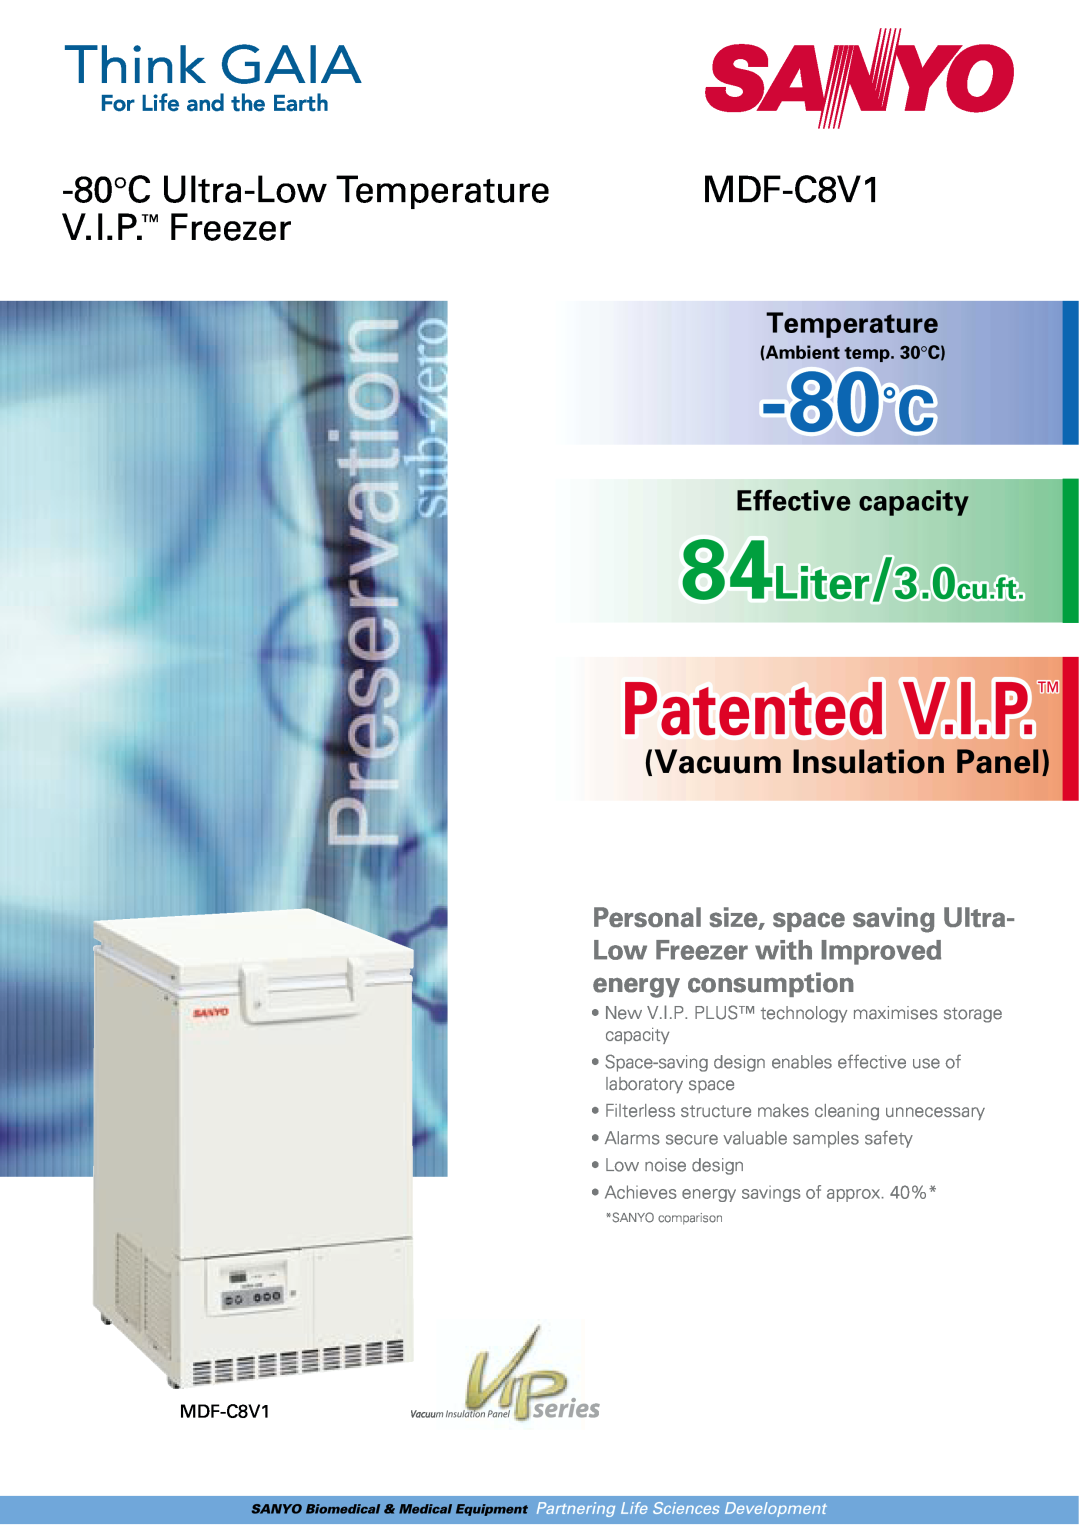 Sanyo MDF-C8V1 manual Ambient temp. 30C, 80˚C, Patented V.I.P, Liter/3.0cu.ft, 80C Ultra-LowTemperature, V.I.P. Freezer 